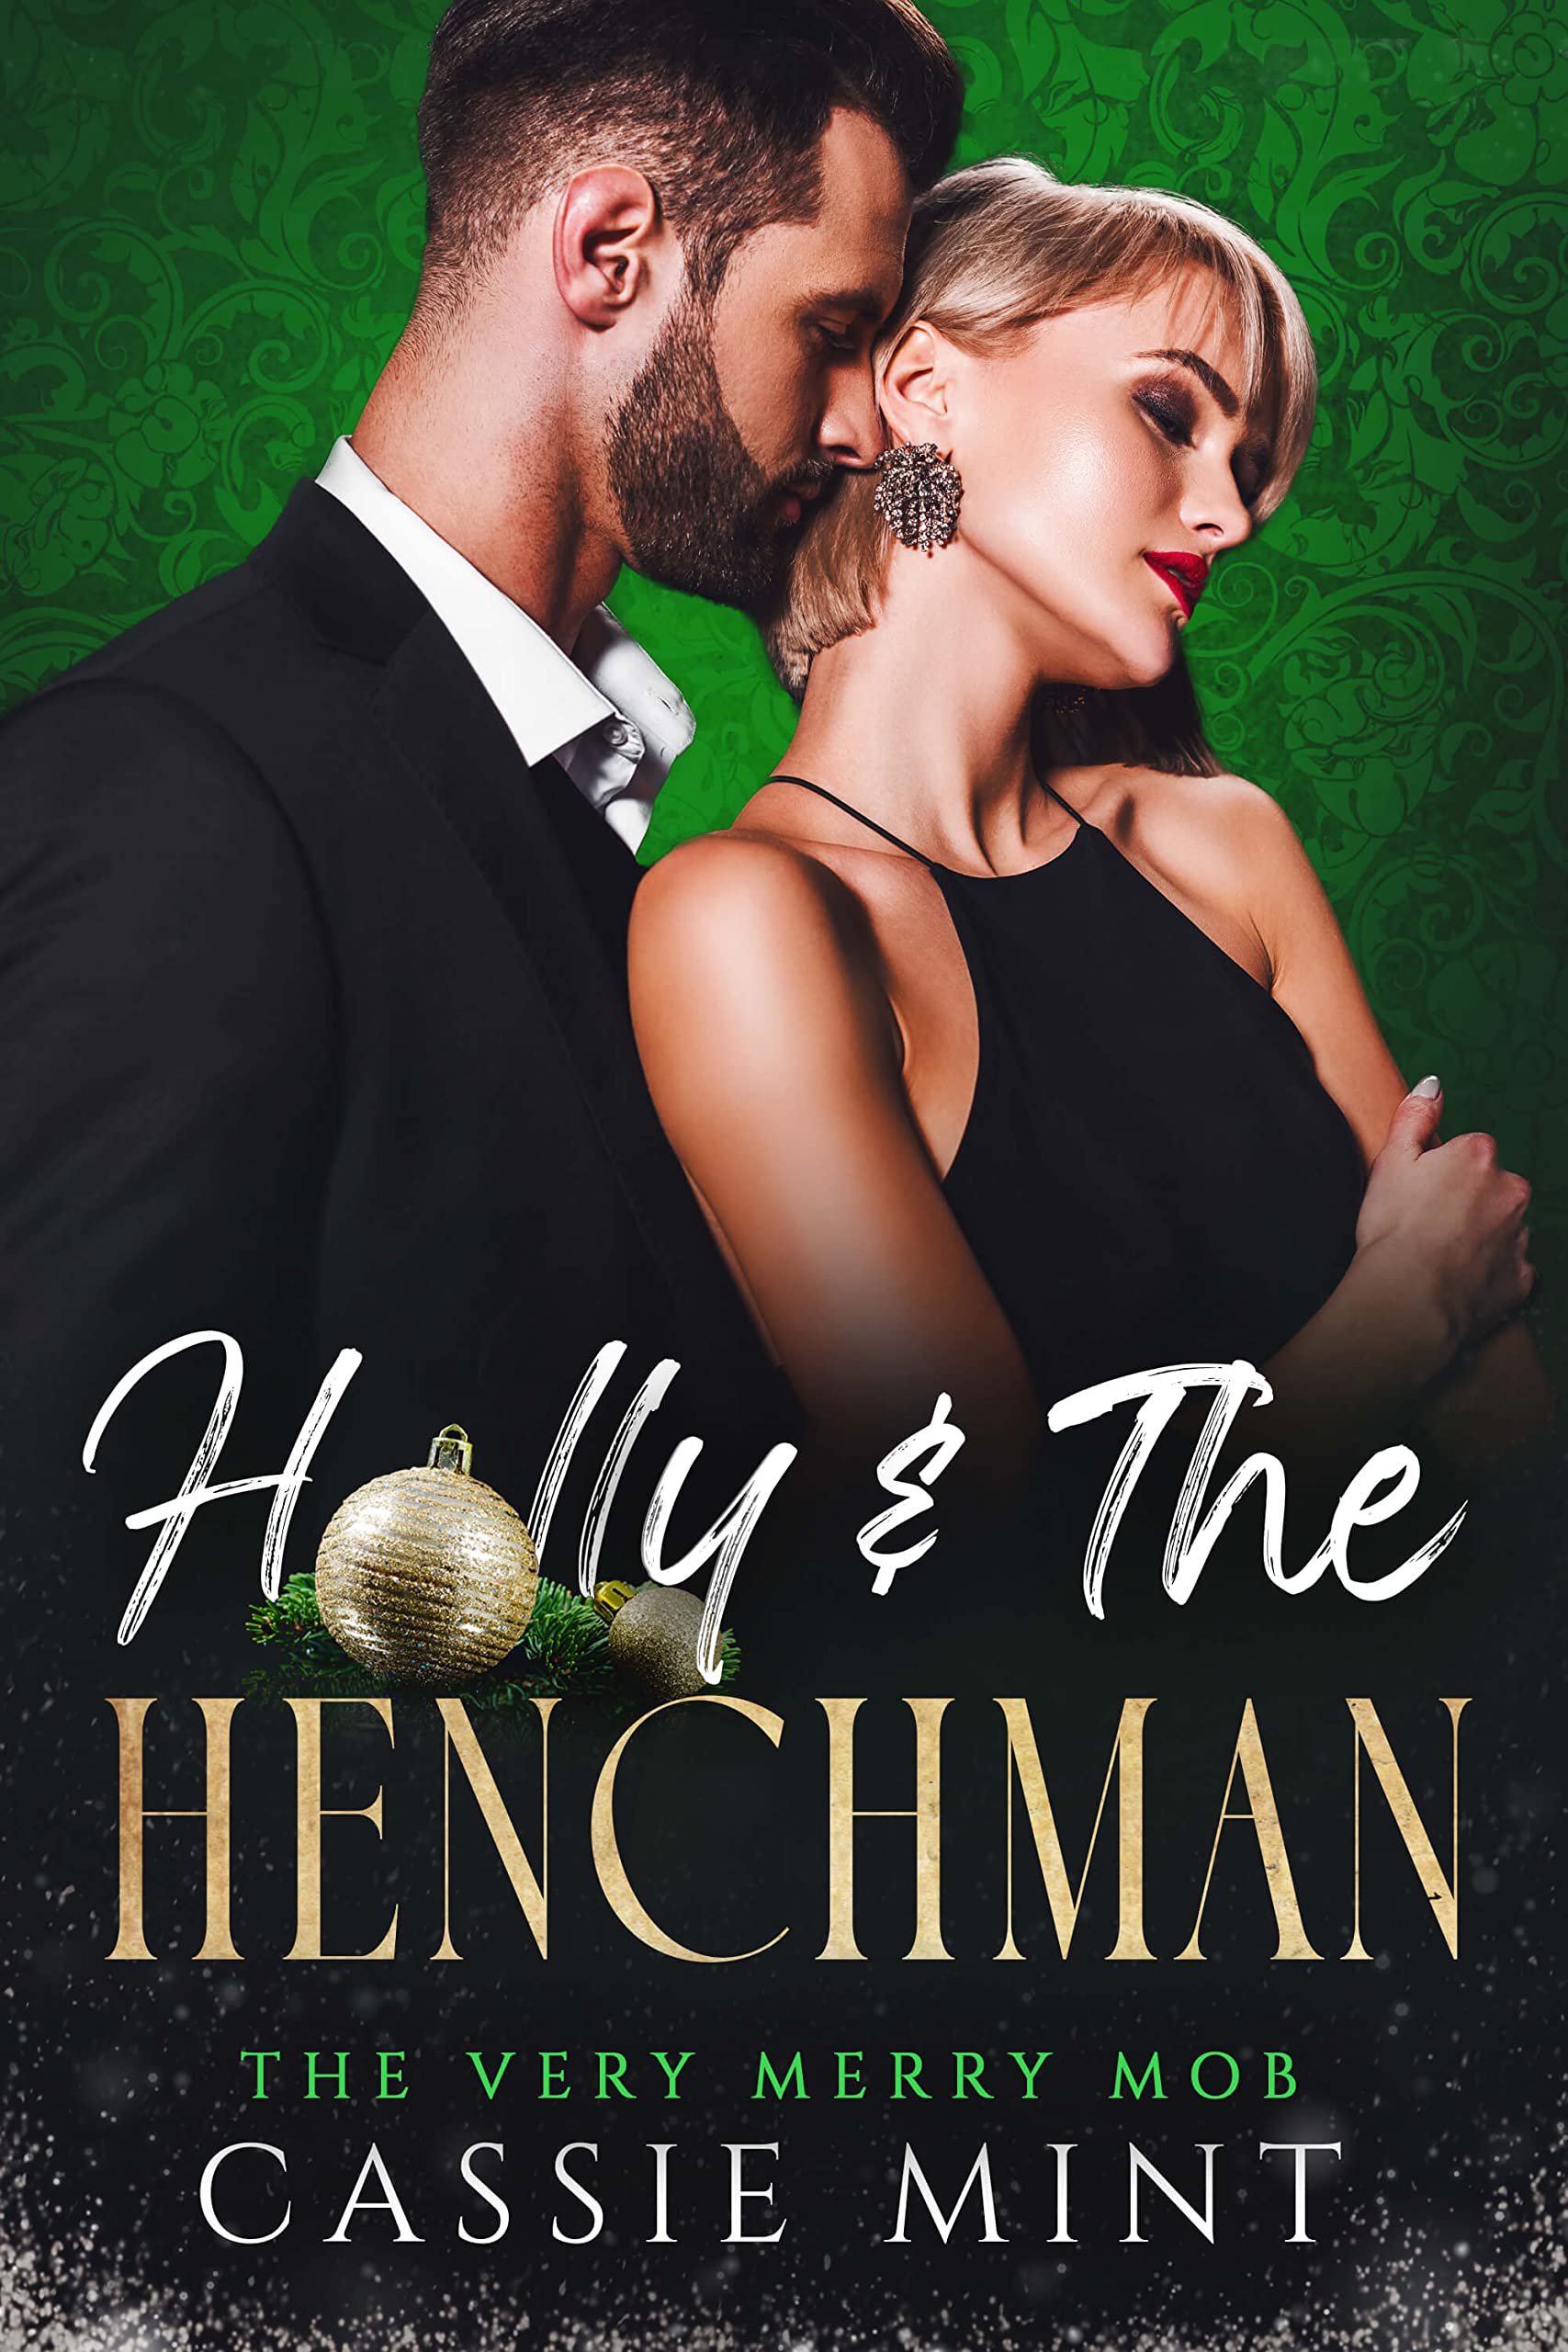 Holly & The Henchman